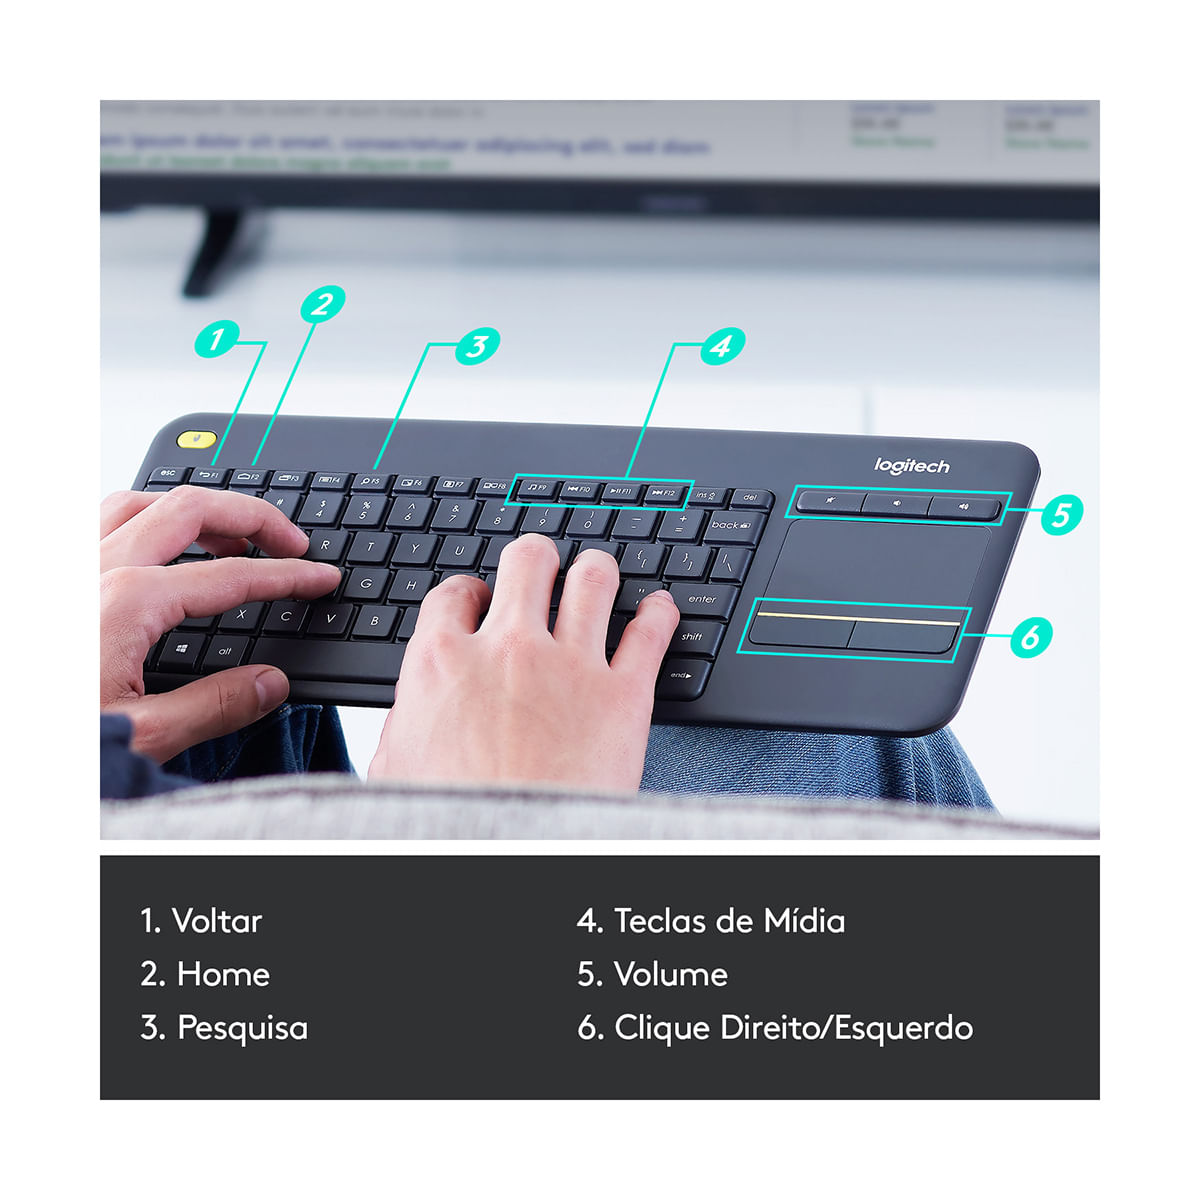 teclado-sem-fio-logitech-k400-plus-tv-com-touchpad-integrado-conexao-usb-unifying-e-layout-abnt2-3.jpg